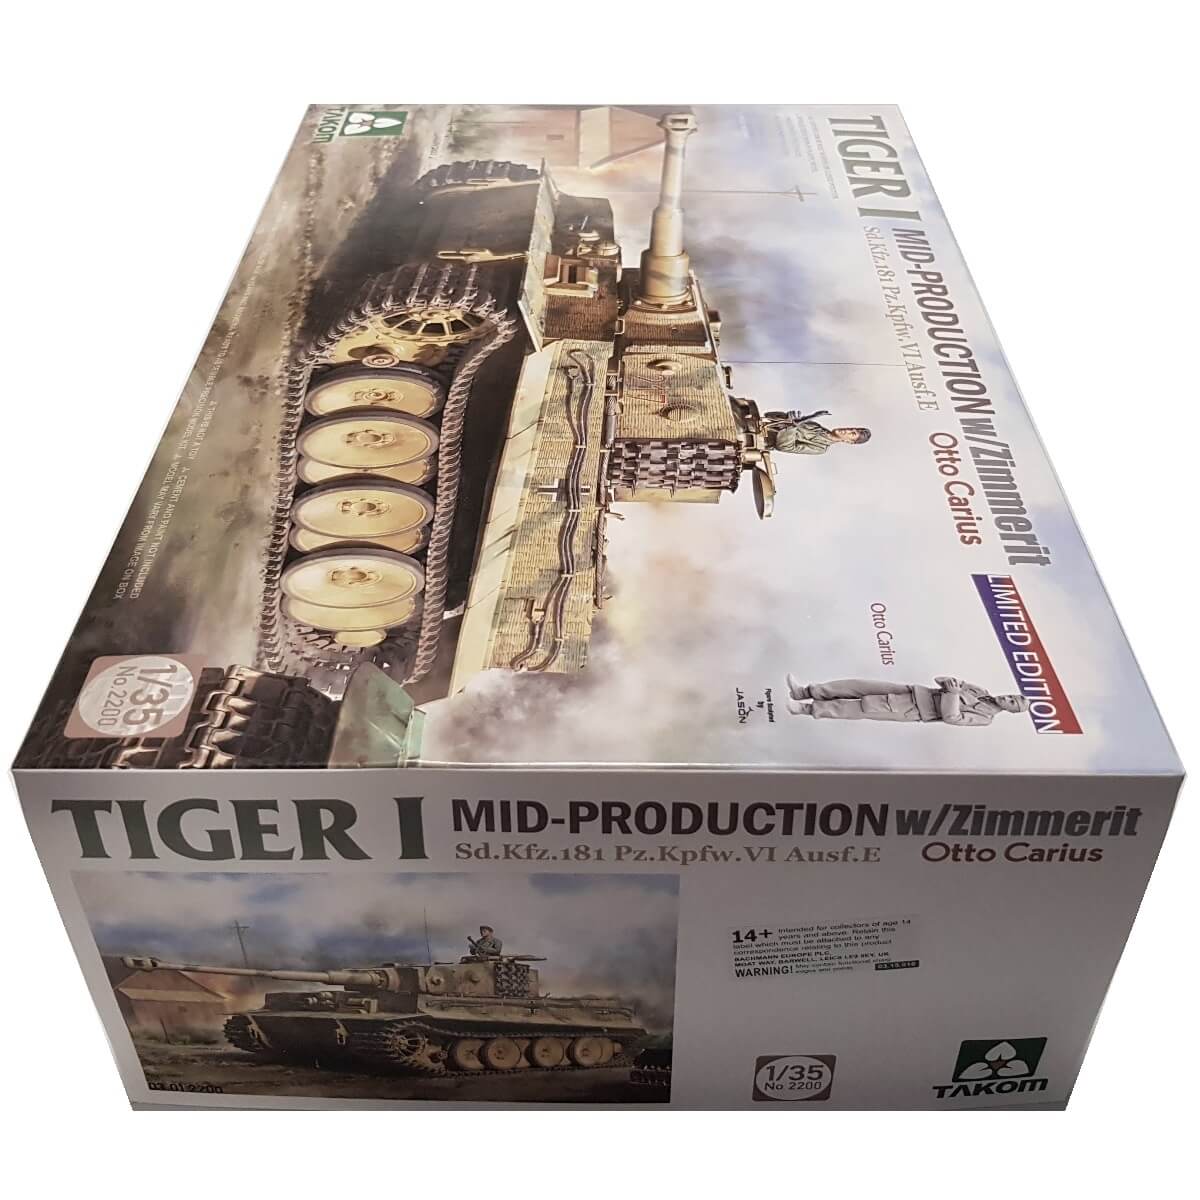 1:35 Tiger I Mid Production with Zimmerit Sd.Kfz. 181 Pz.Kpfw. VI Ausf. E - Otto Carius - TAKOM